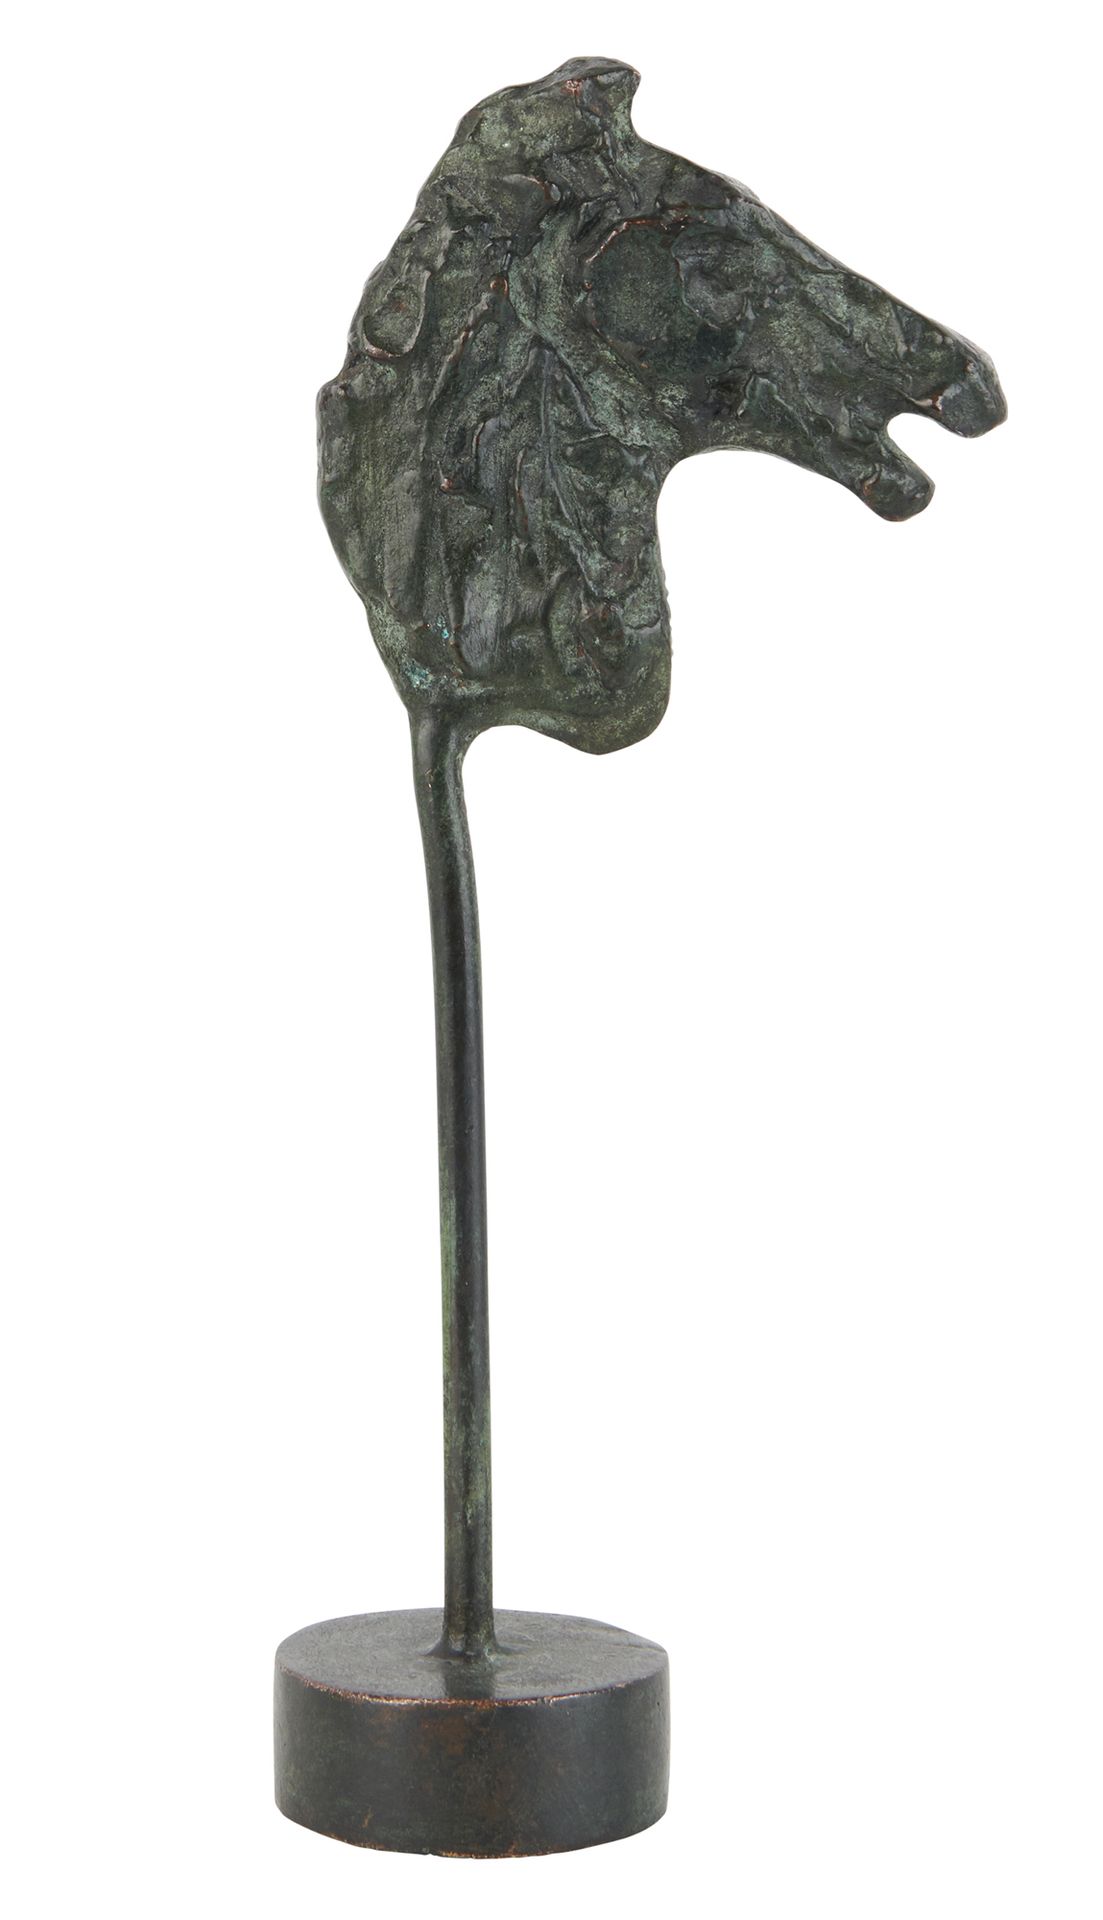 Diego GIACOMETTI 1902-1985 TÊTE DE CHEVAL, circa 1965
Bronze à patine verte anti&hellip;